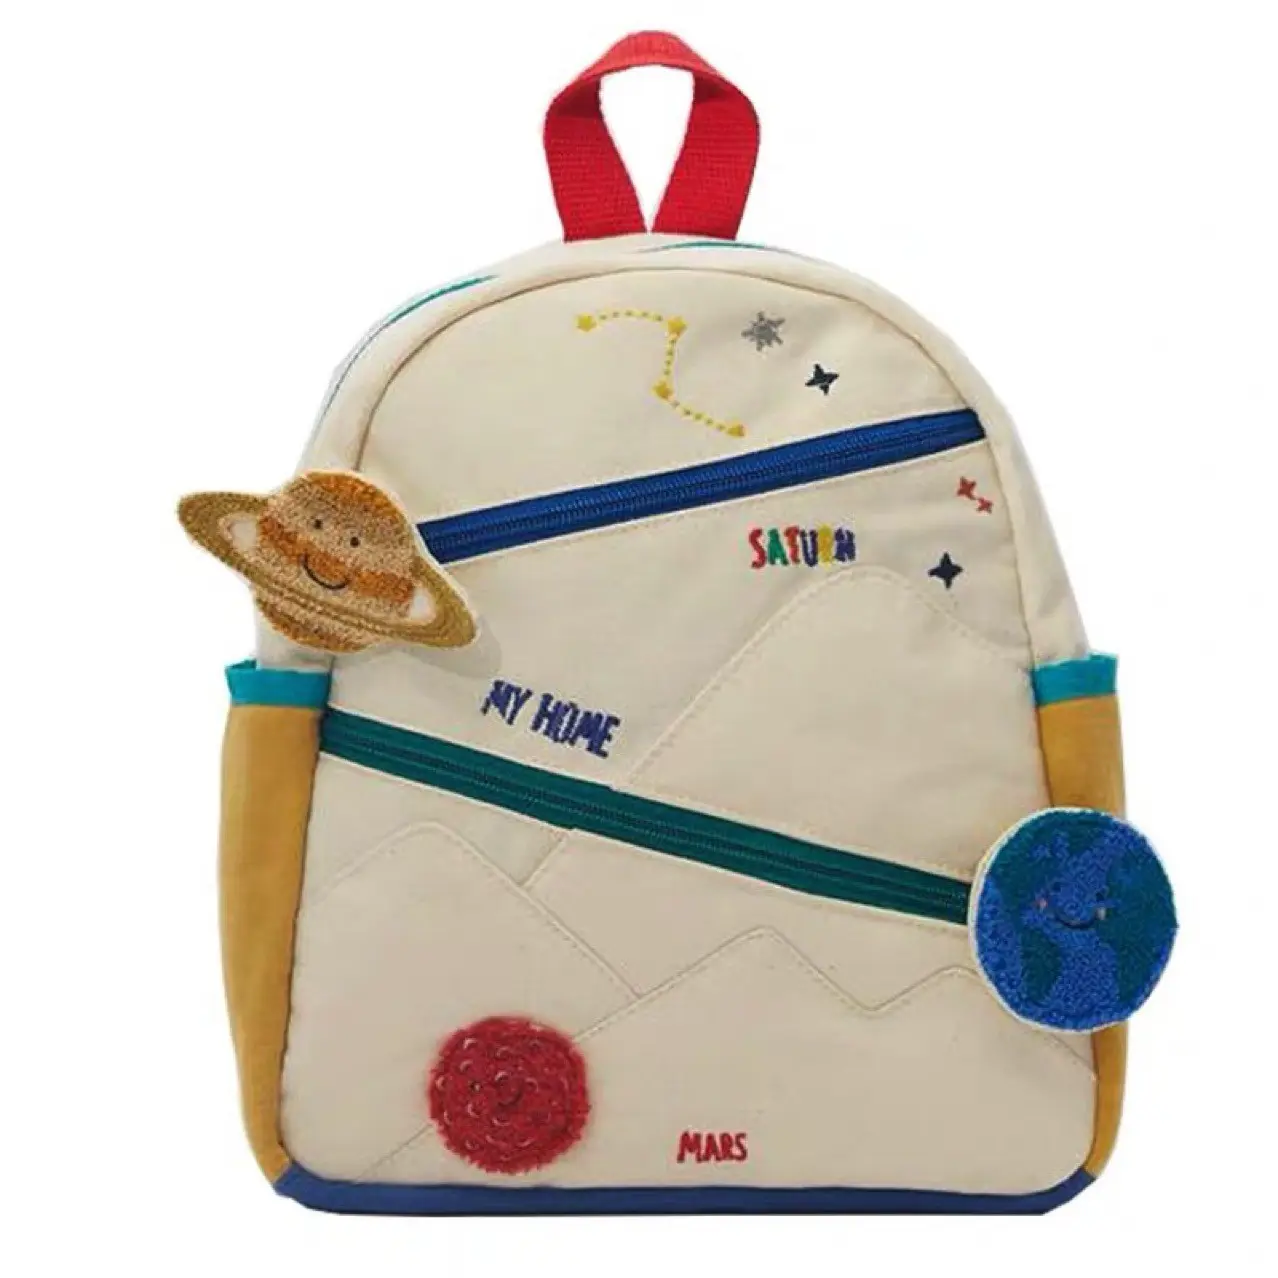 Venta caliente patchwork bolsa de lona de algodón Saturno planeta mochila bordada linda chica colorida mochila mochilas escolares